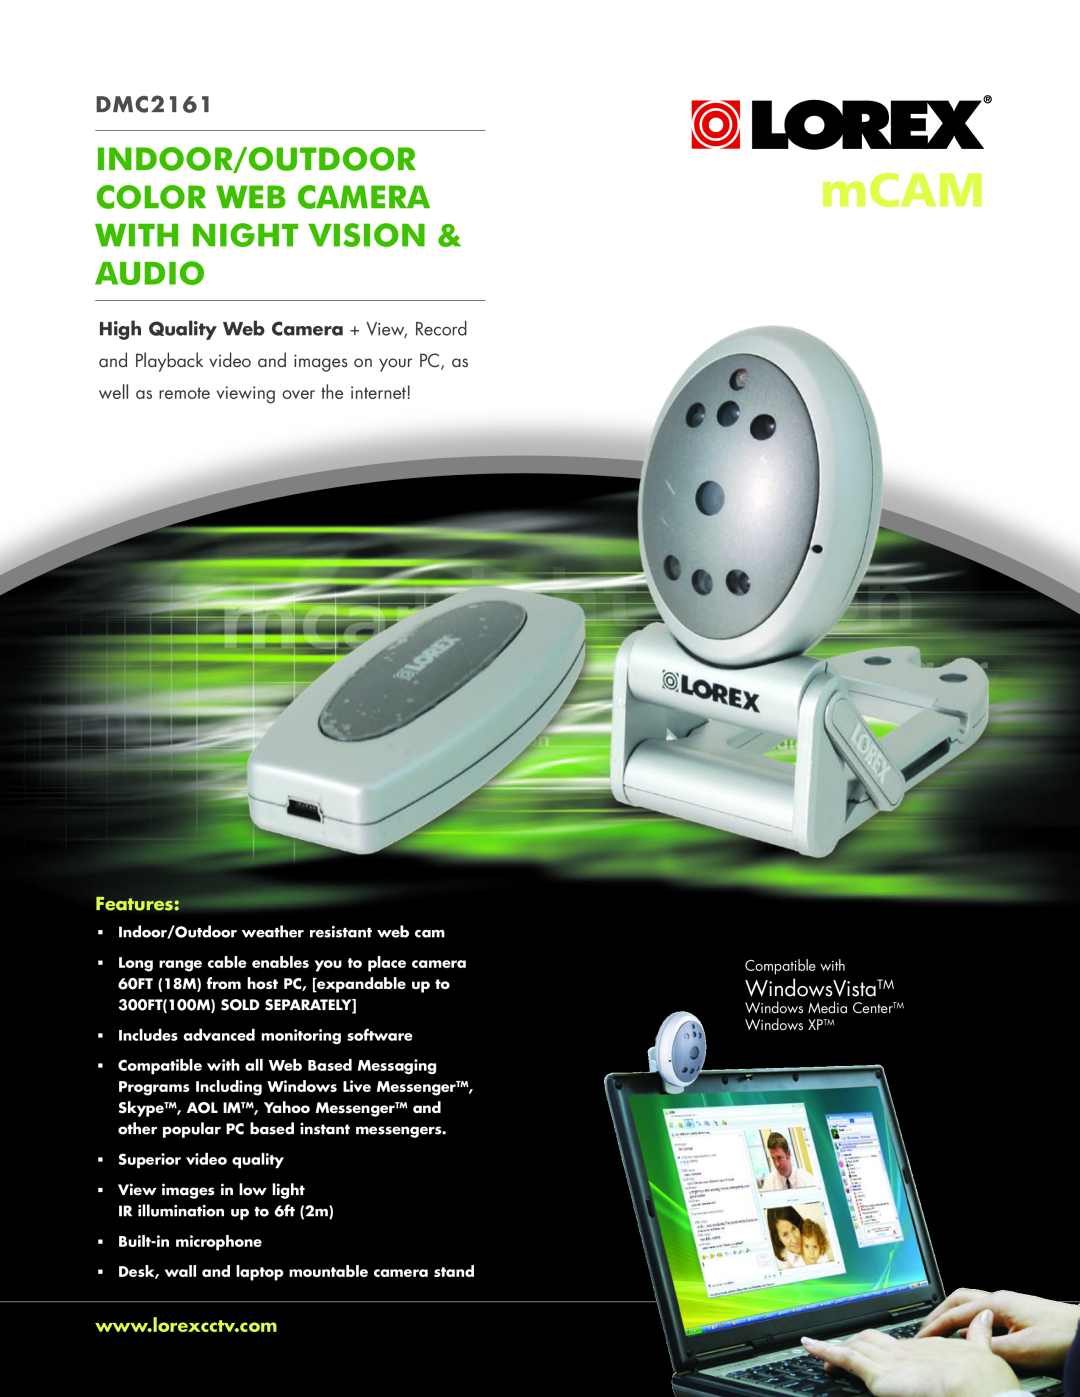 LOREX Technology DMC2161 manual mCAM, Indoor/Outdoor Color Web Camera With Night Vision & Audio, WindowsVistaTM, Features 